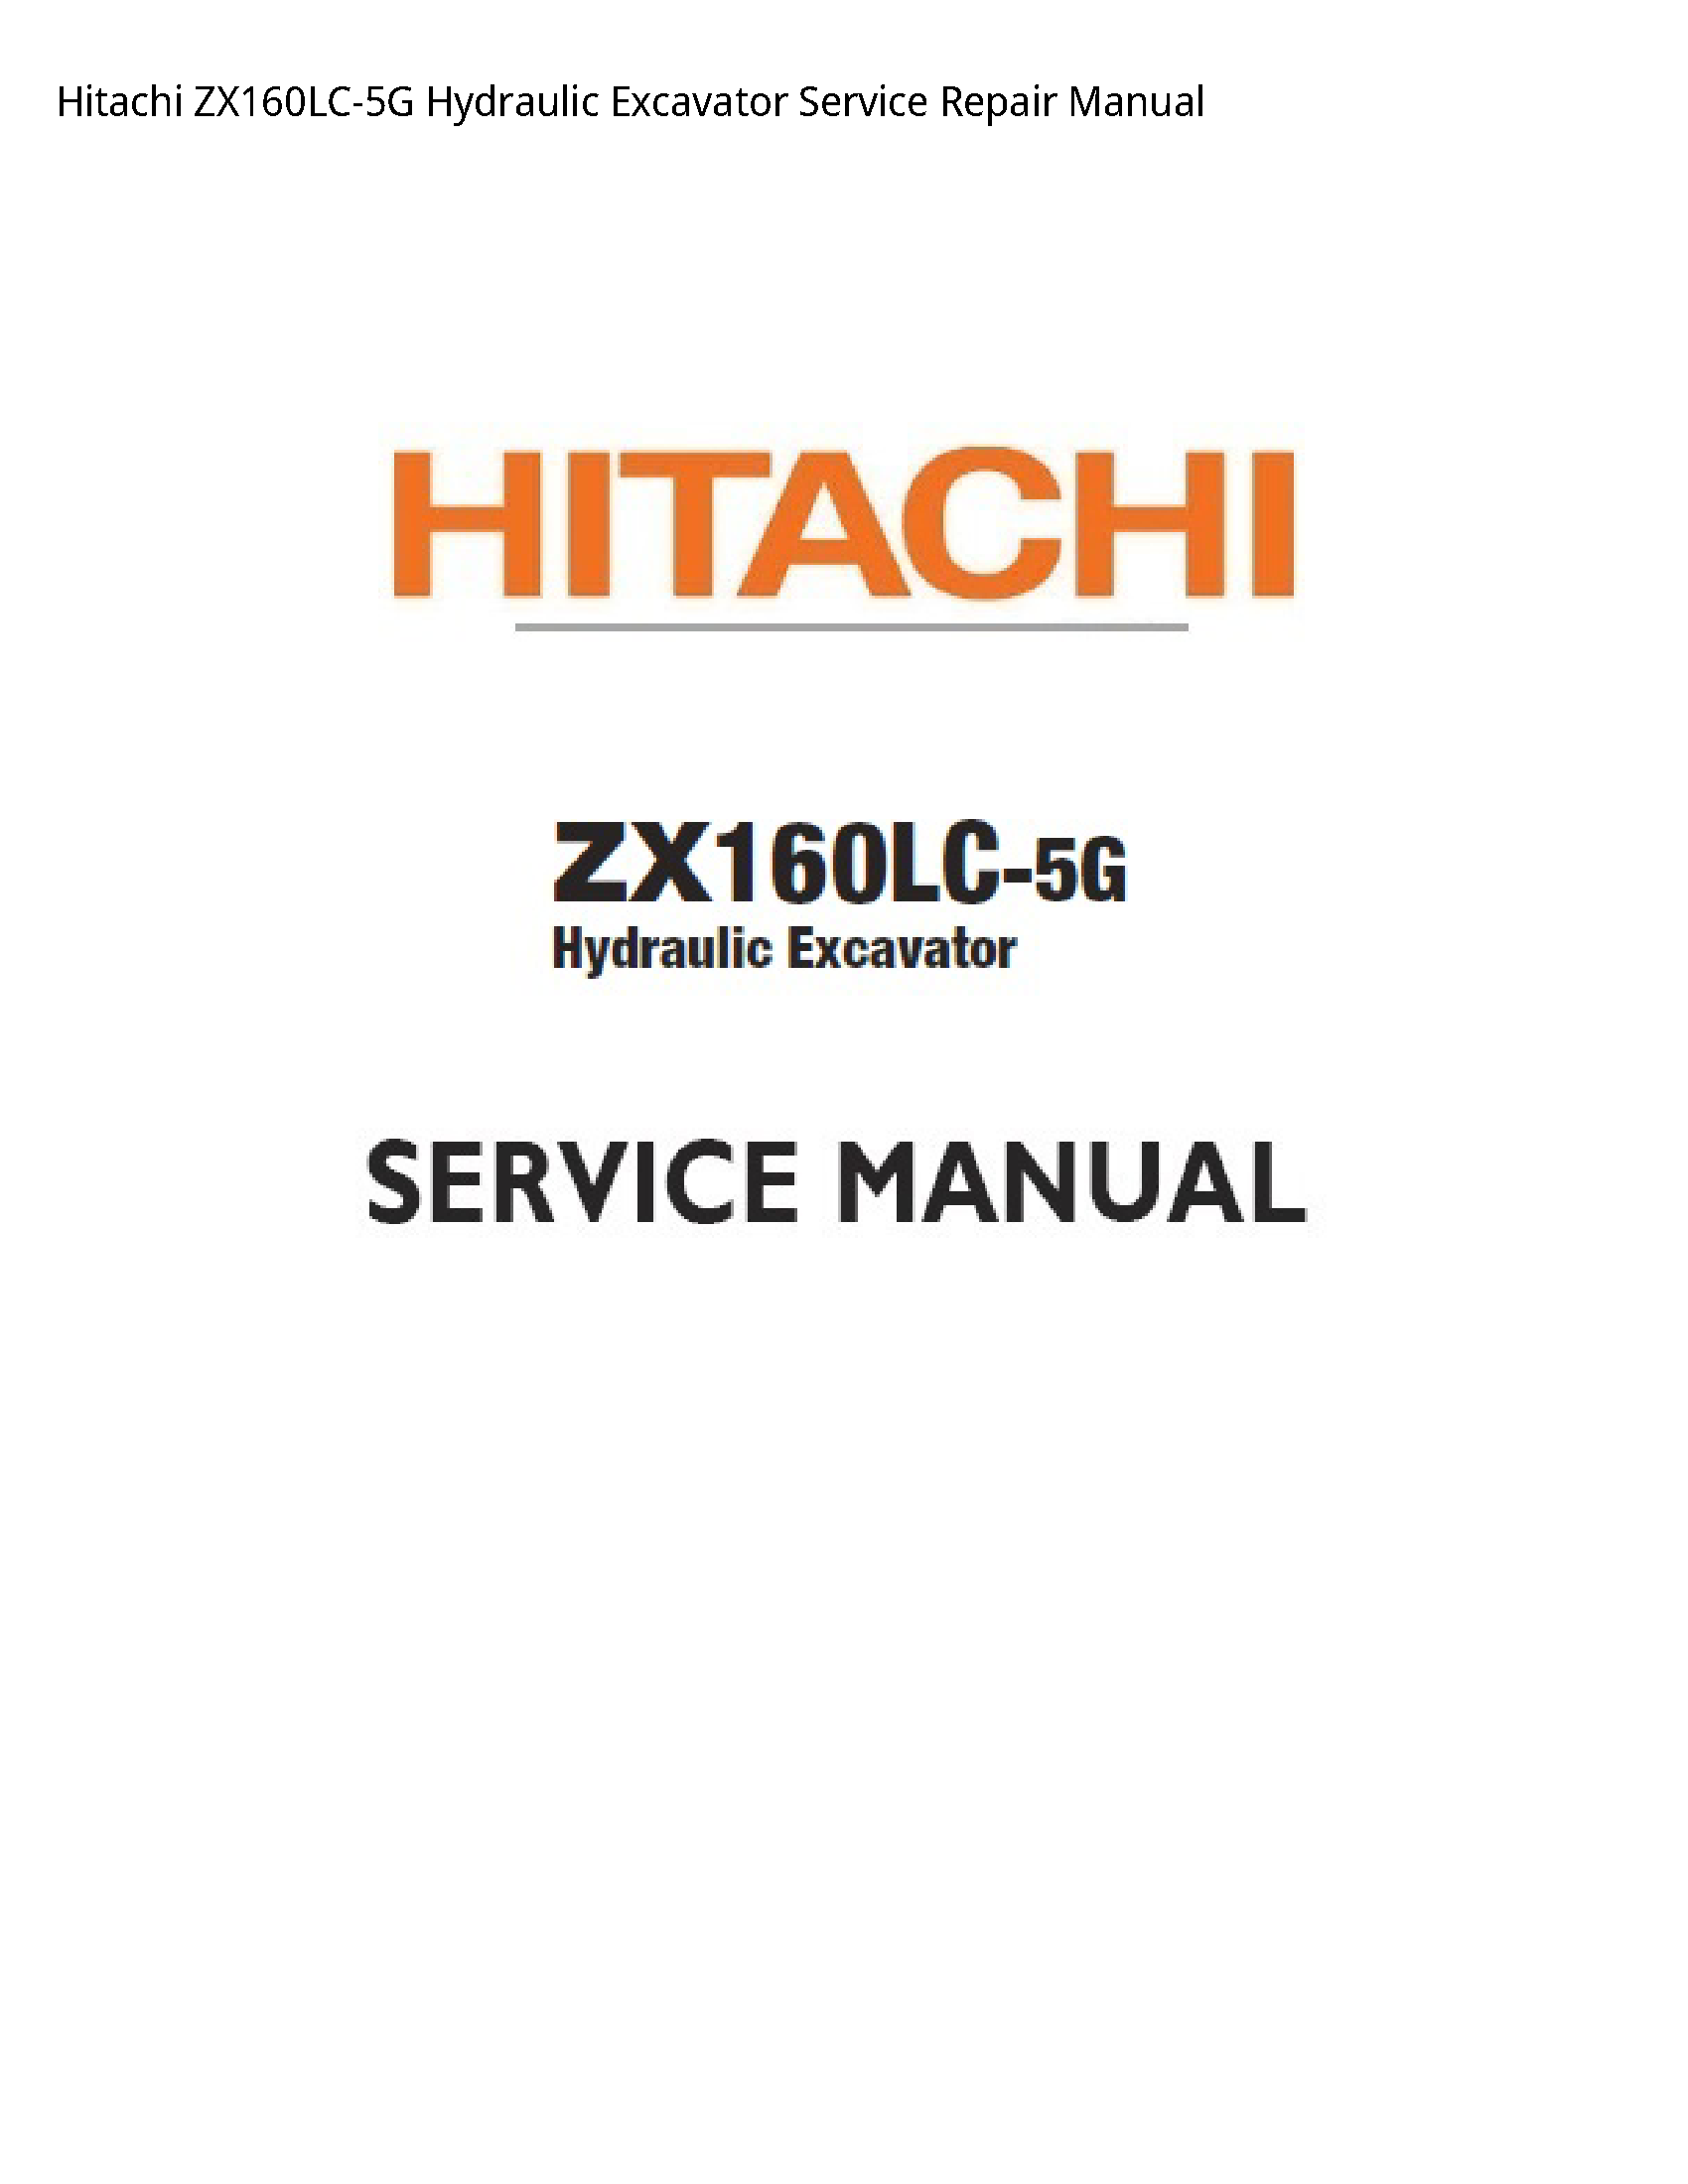 Hitachi ZX160LC-5G Hydraulic Excavator manual